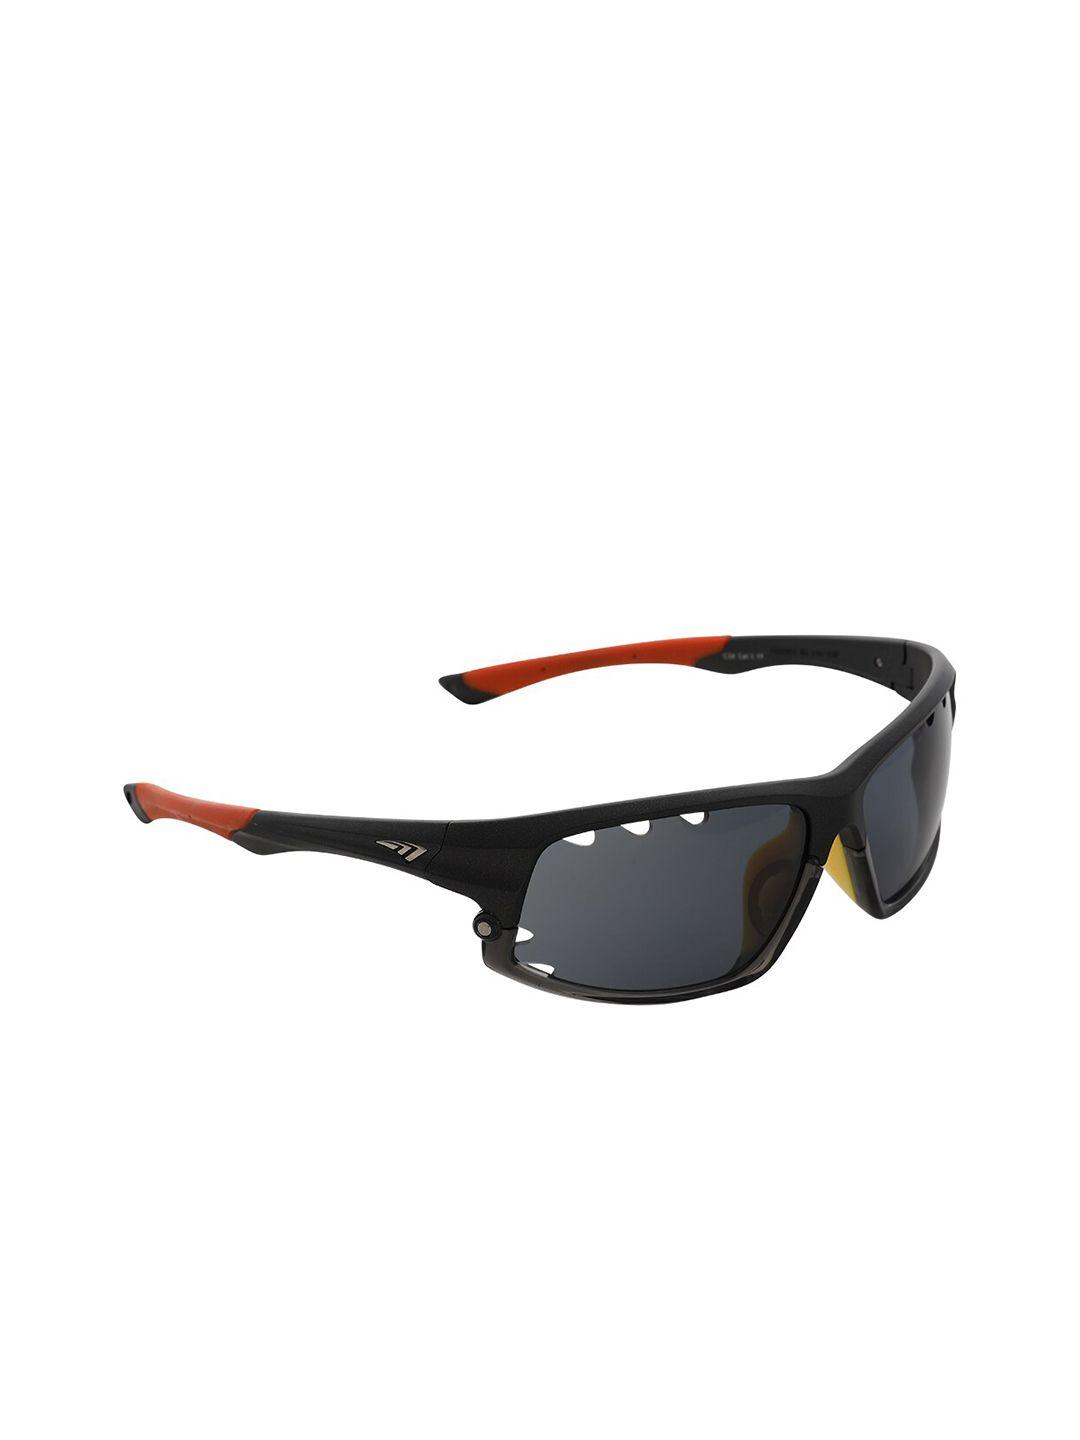 charles london men grey lens & black sports sunglasses with uv protected lens